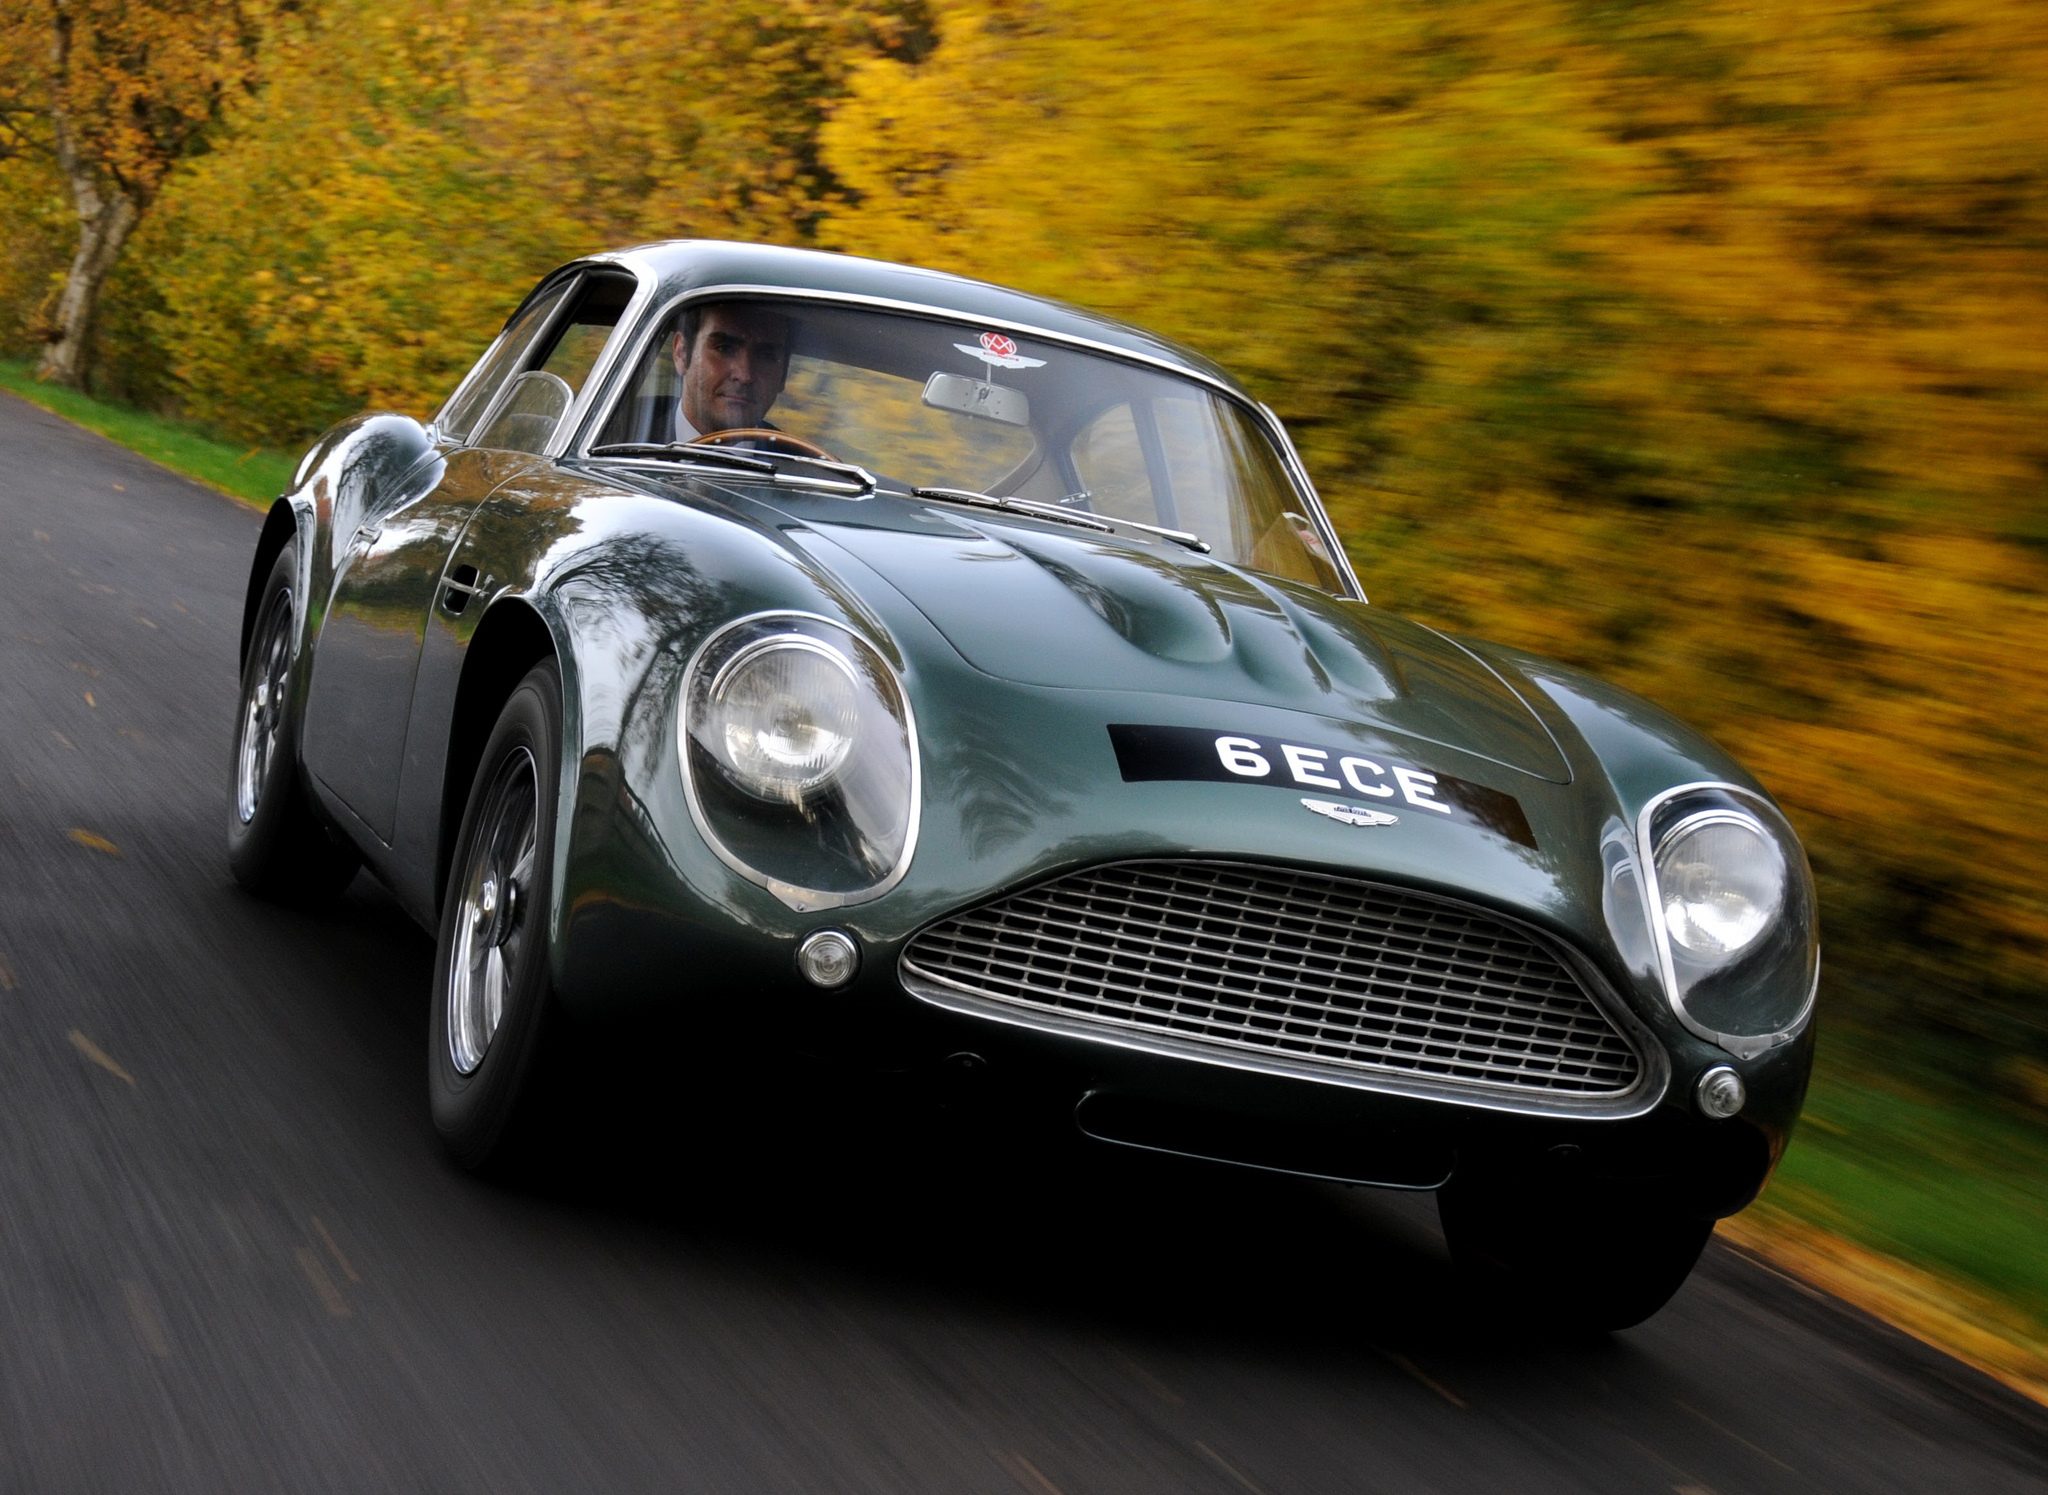 Car Of The Day: 1960 Aston Martin DB4 GT Zagato